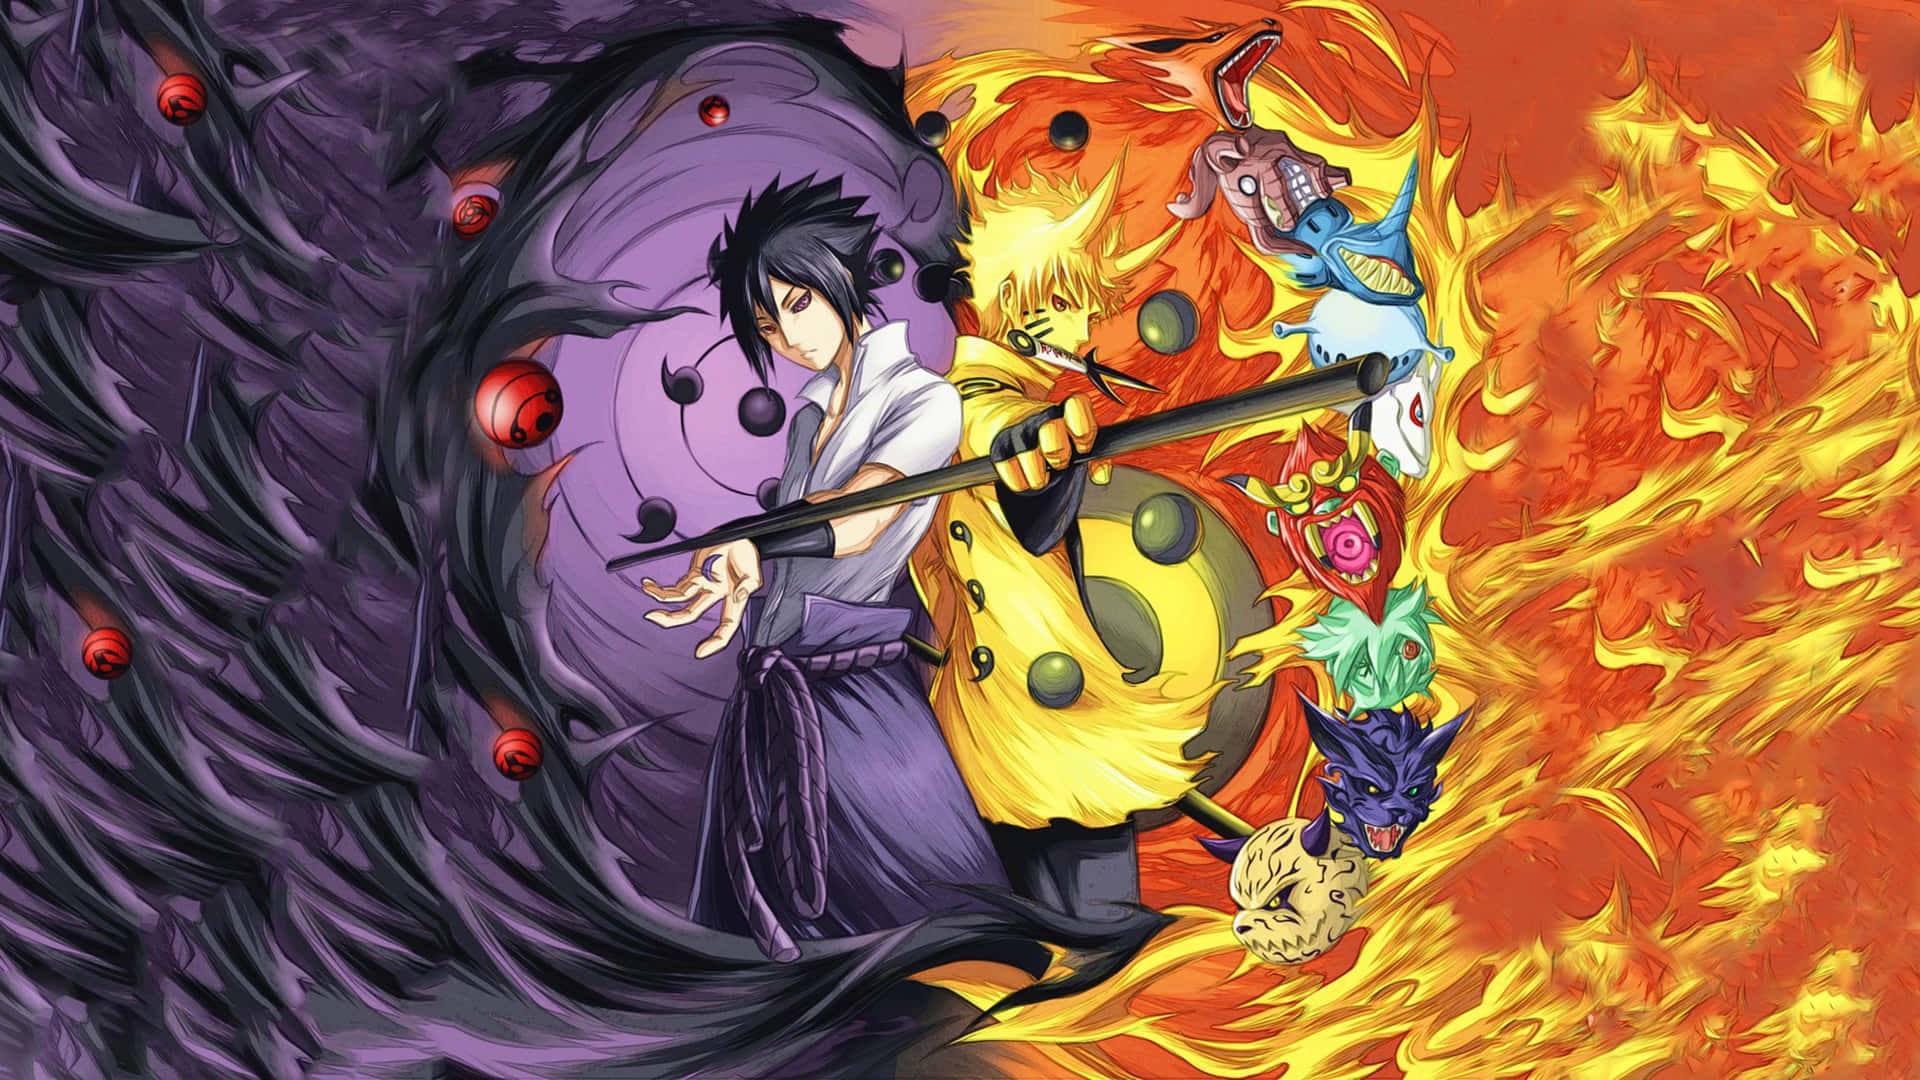 Follow Sasuke's journey as a young ninja Wallpaper